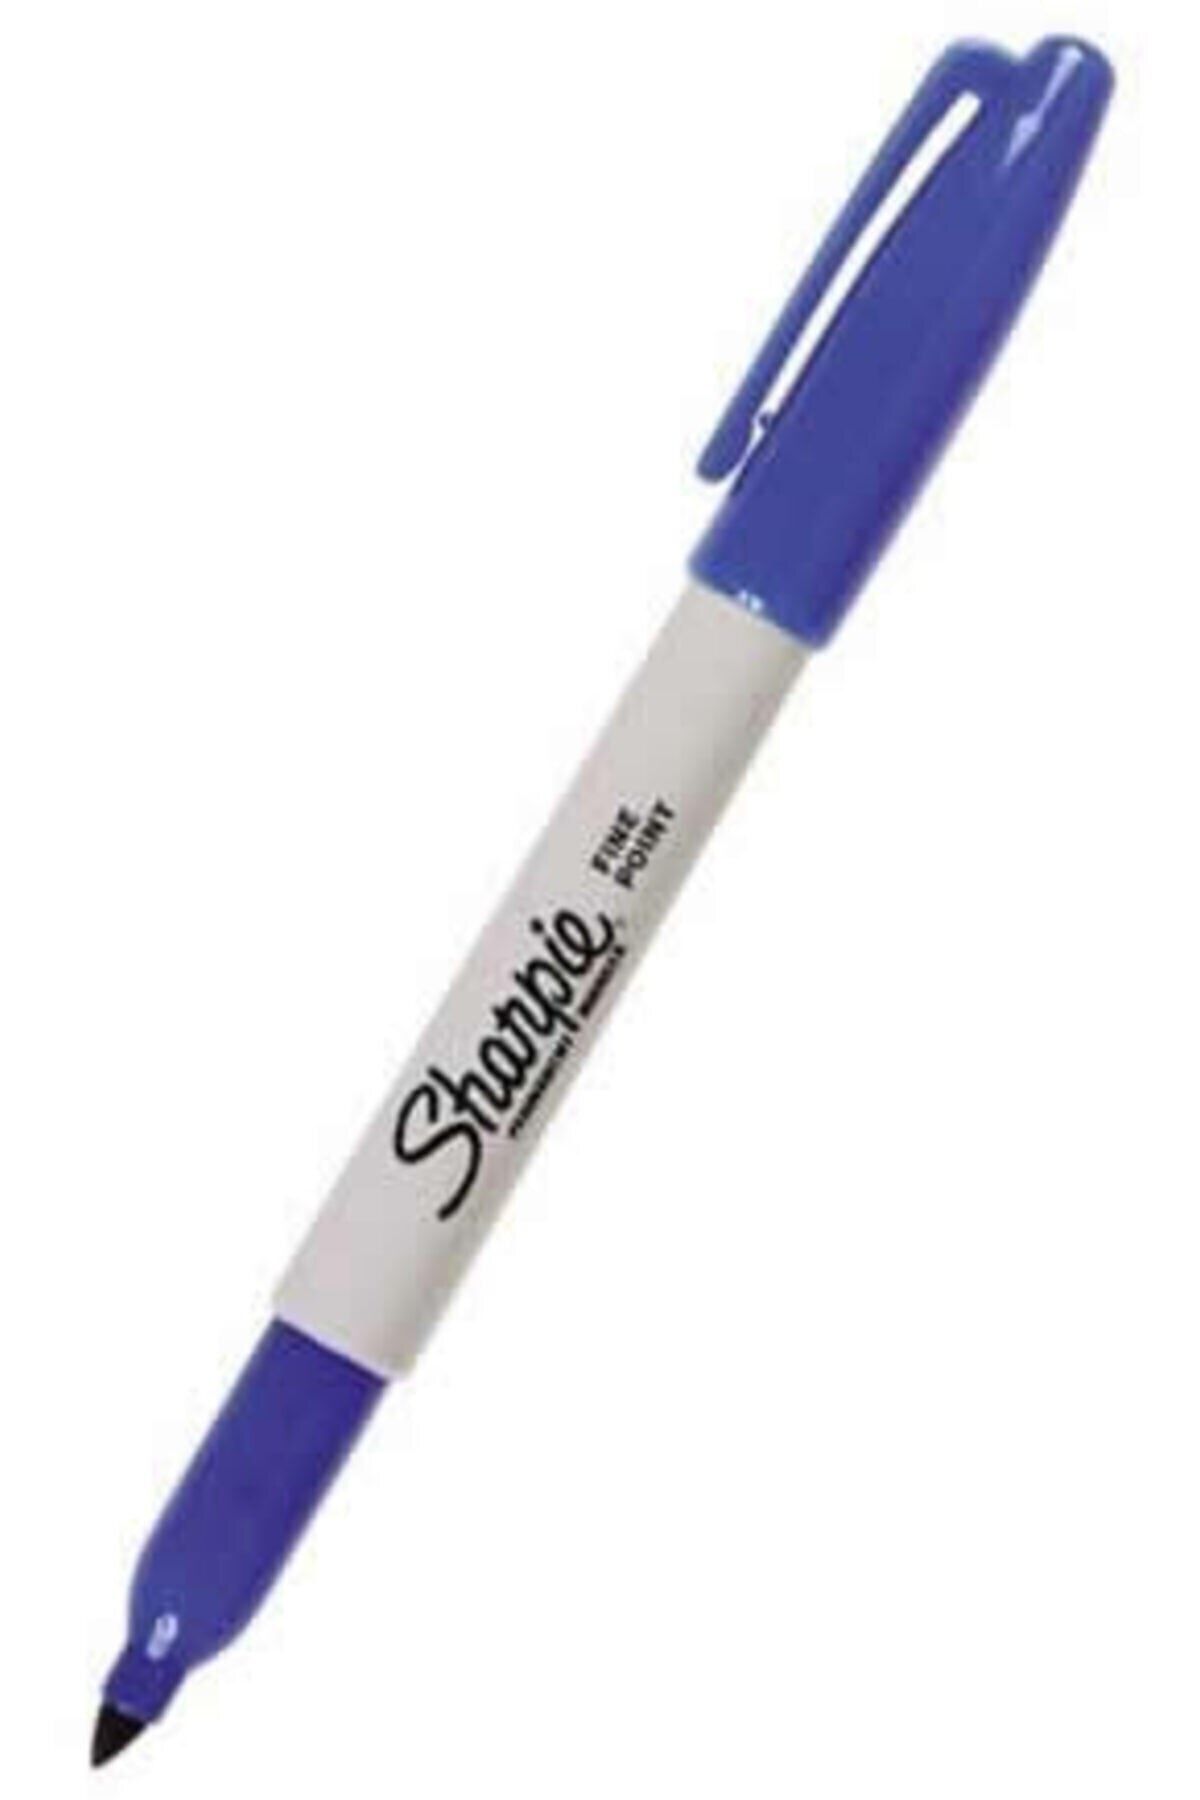 Sharpie Sharpıe Mavi Fıne Permanent Markör Kalem